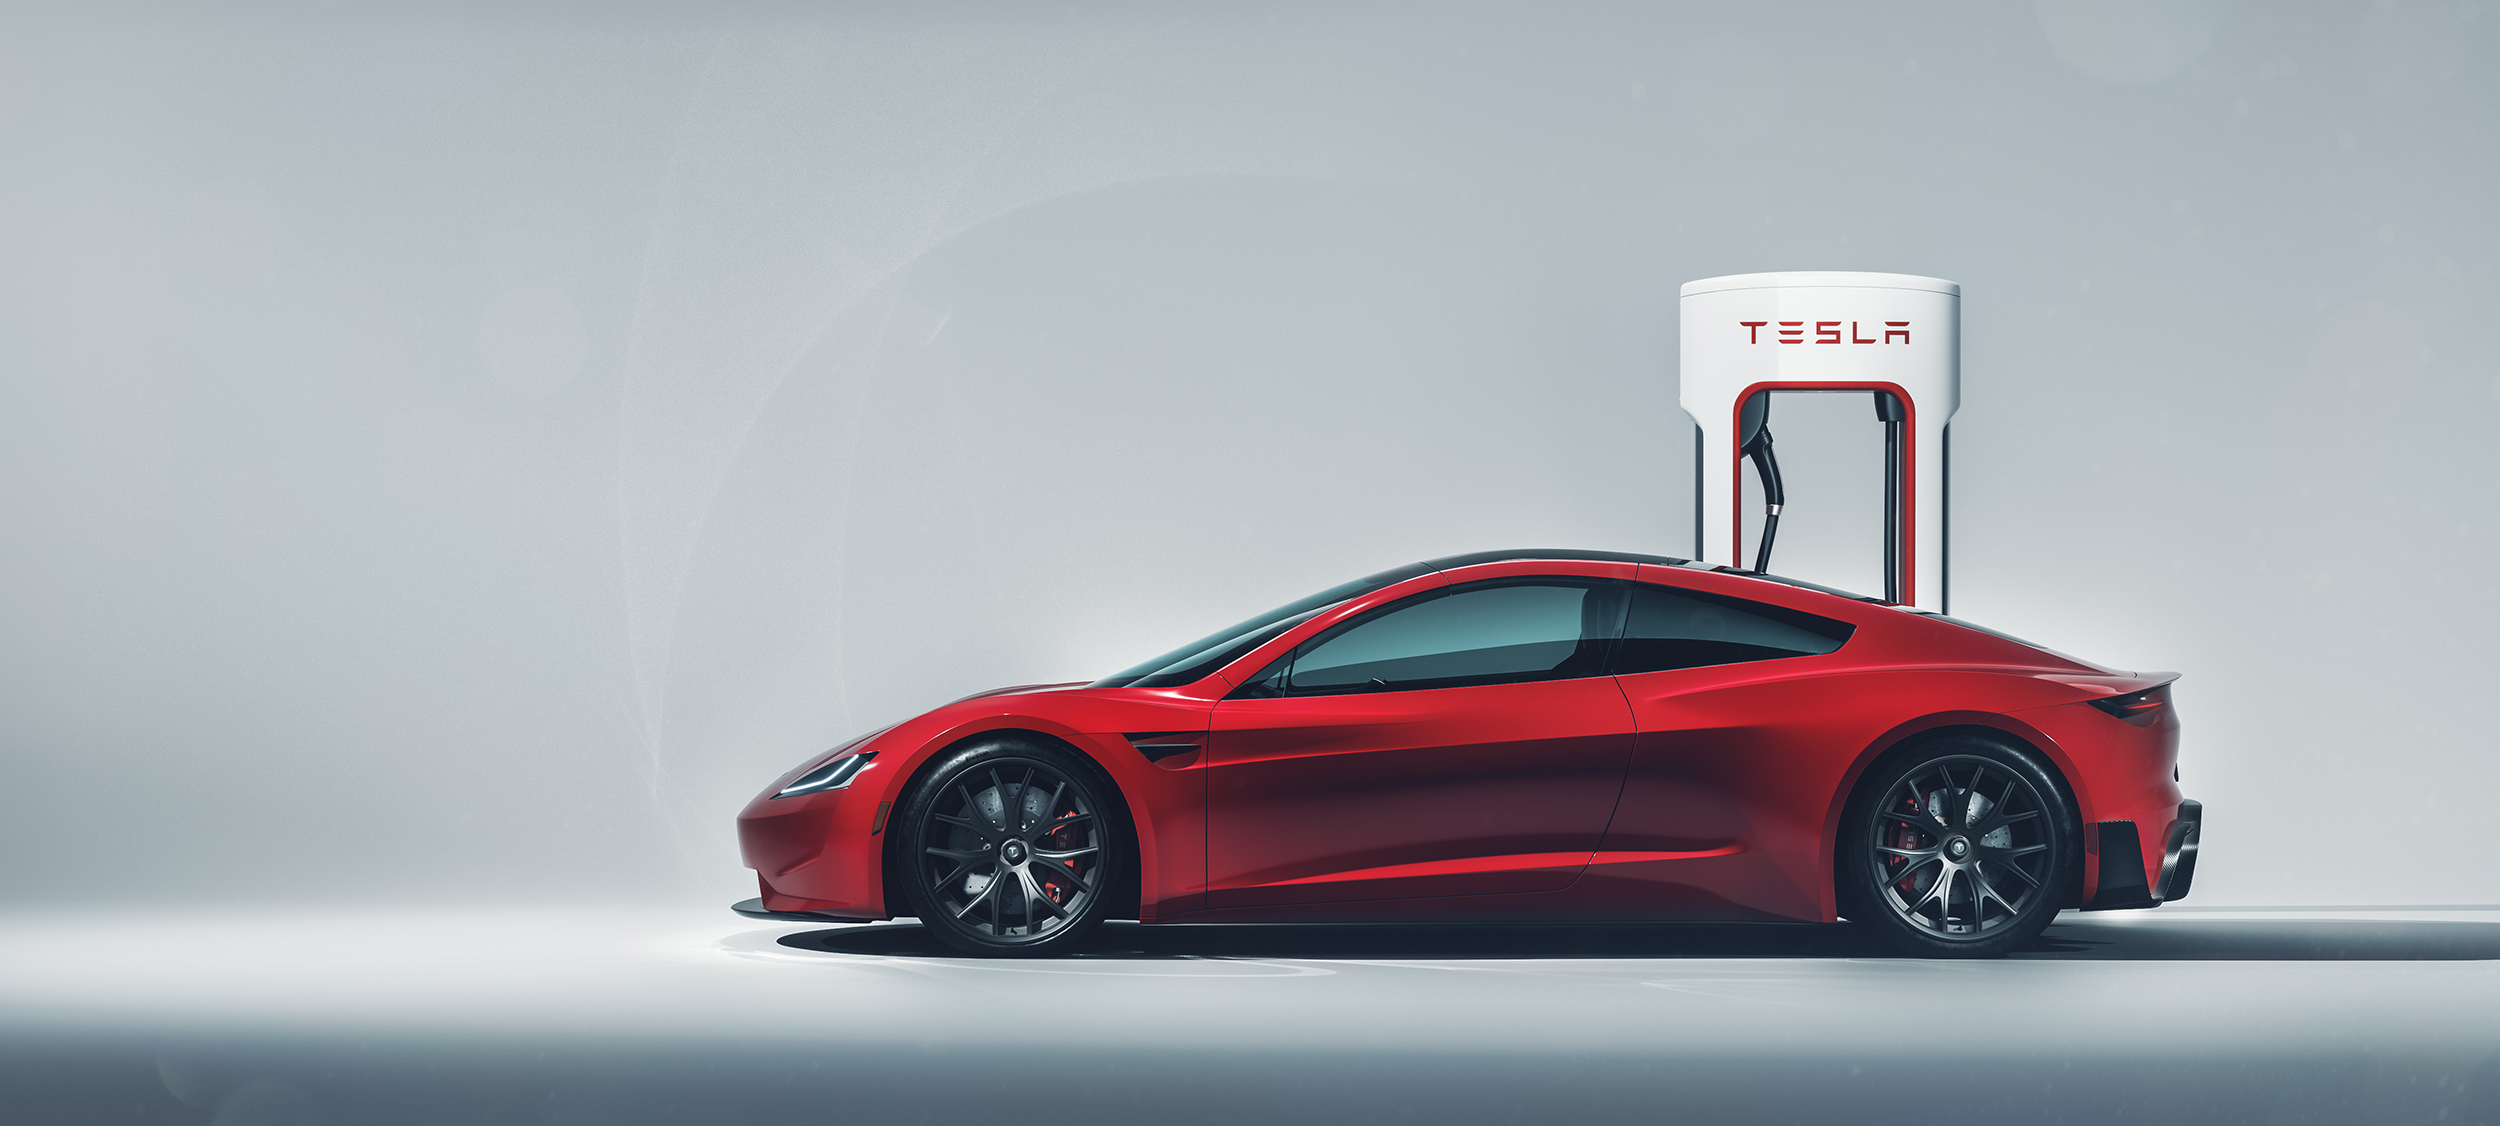 Tesla Wallpapers Charging